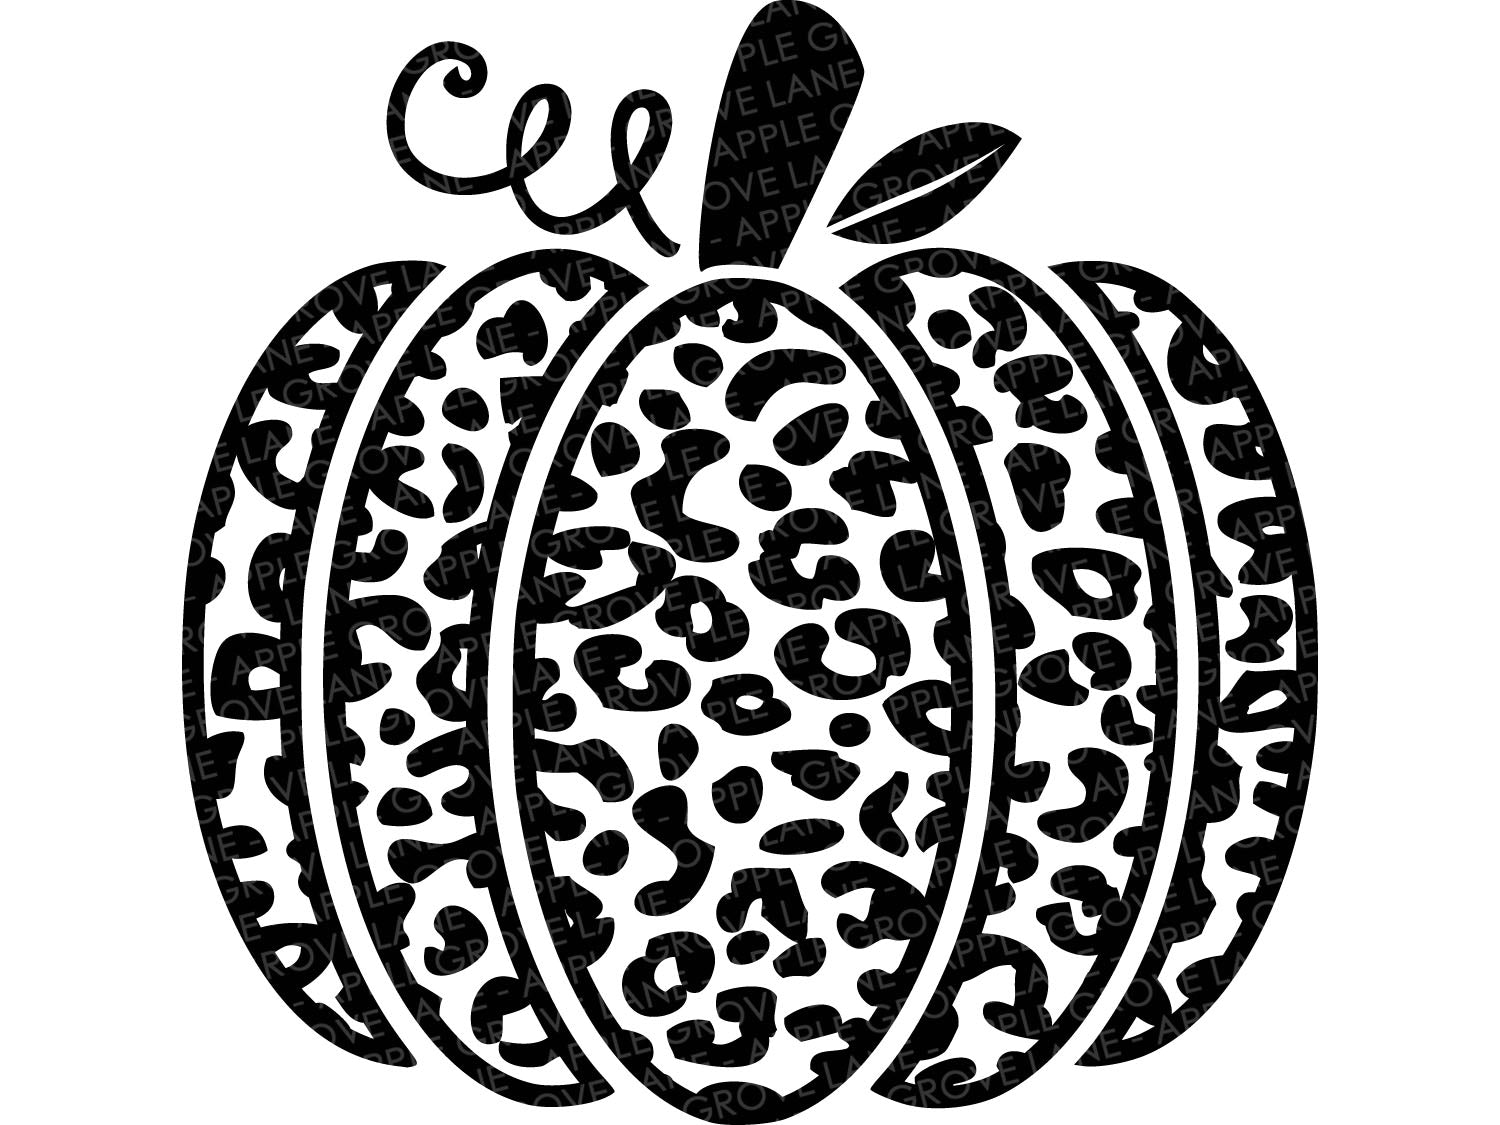 Download Leopard Pumpkin Svg Pumpkin Svg Leopard Print Svg Halloween Svg Apple Grove Lane